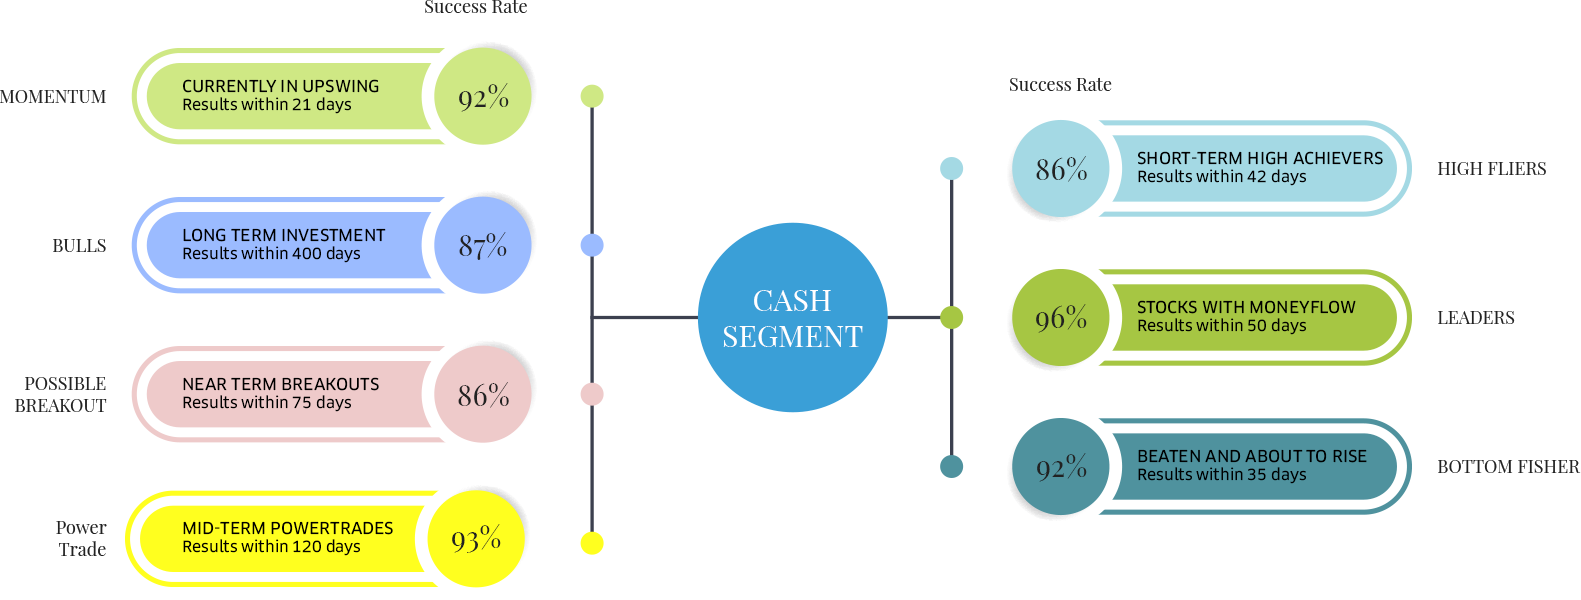 Cash Segment